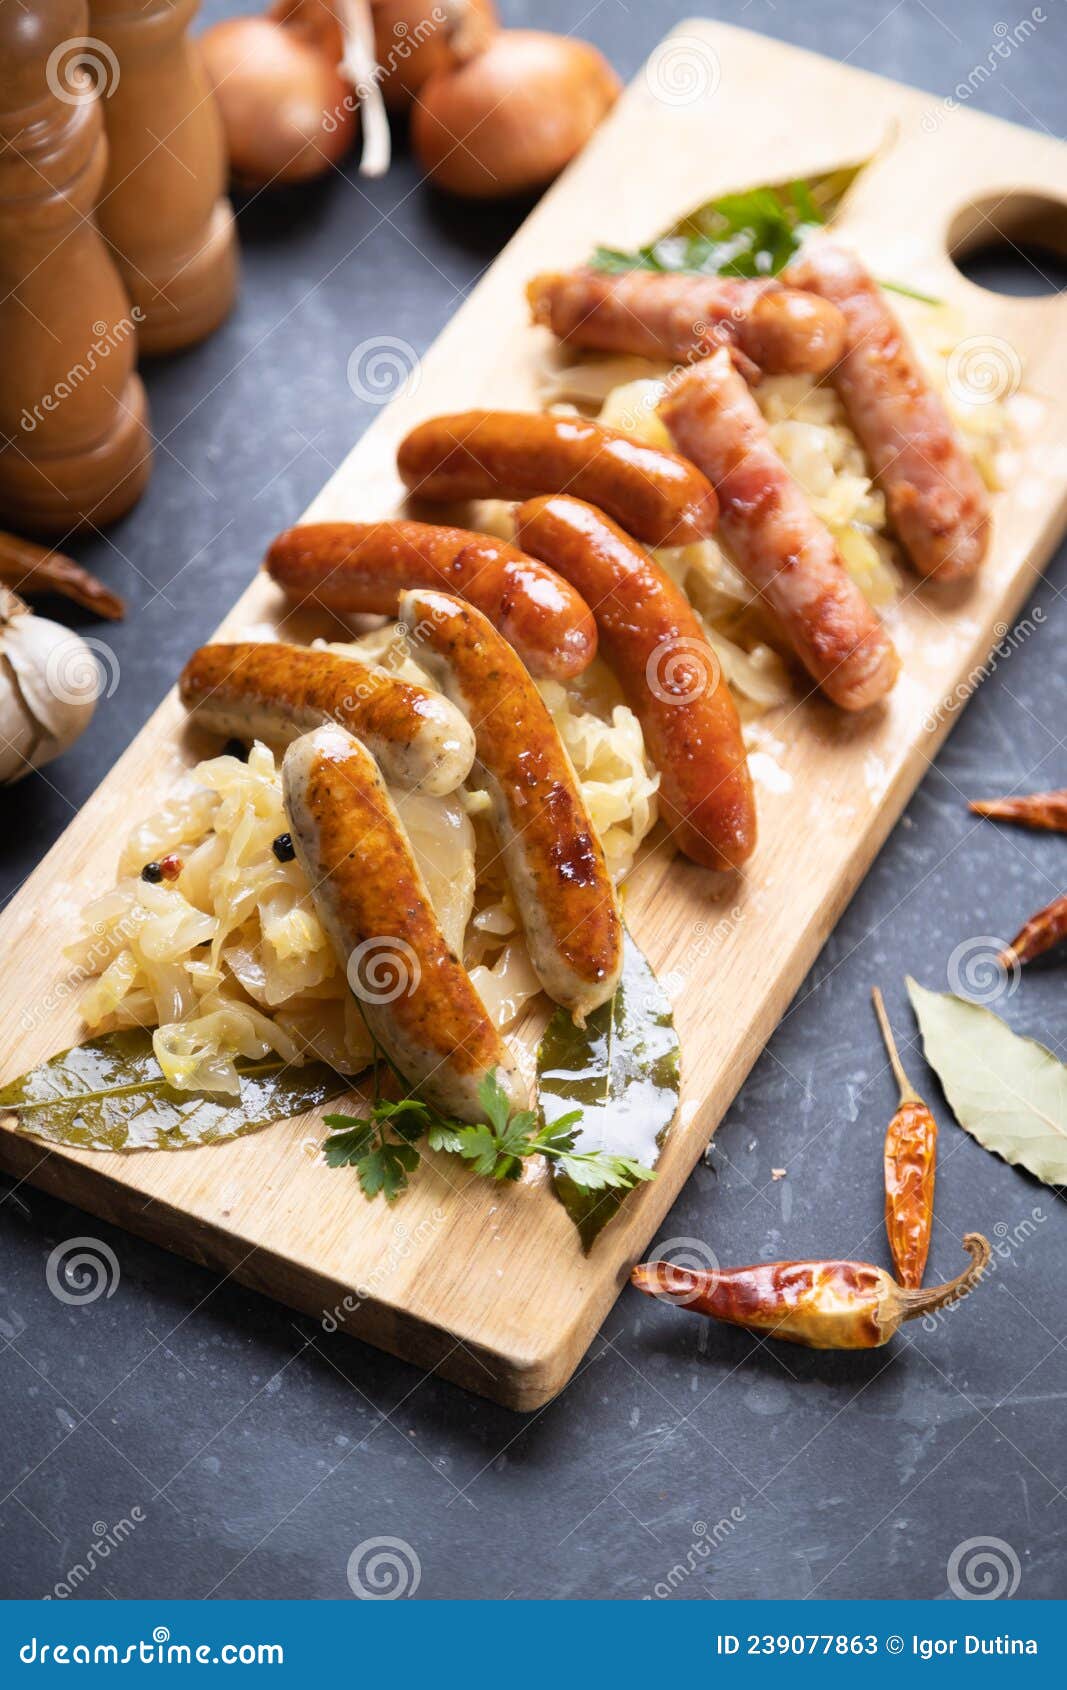 Grilled German Sausage Links with Sauerkraut Stock Image - Image of ...